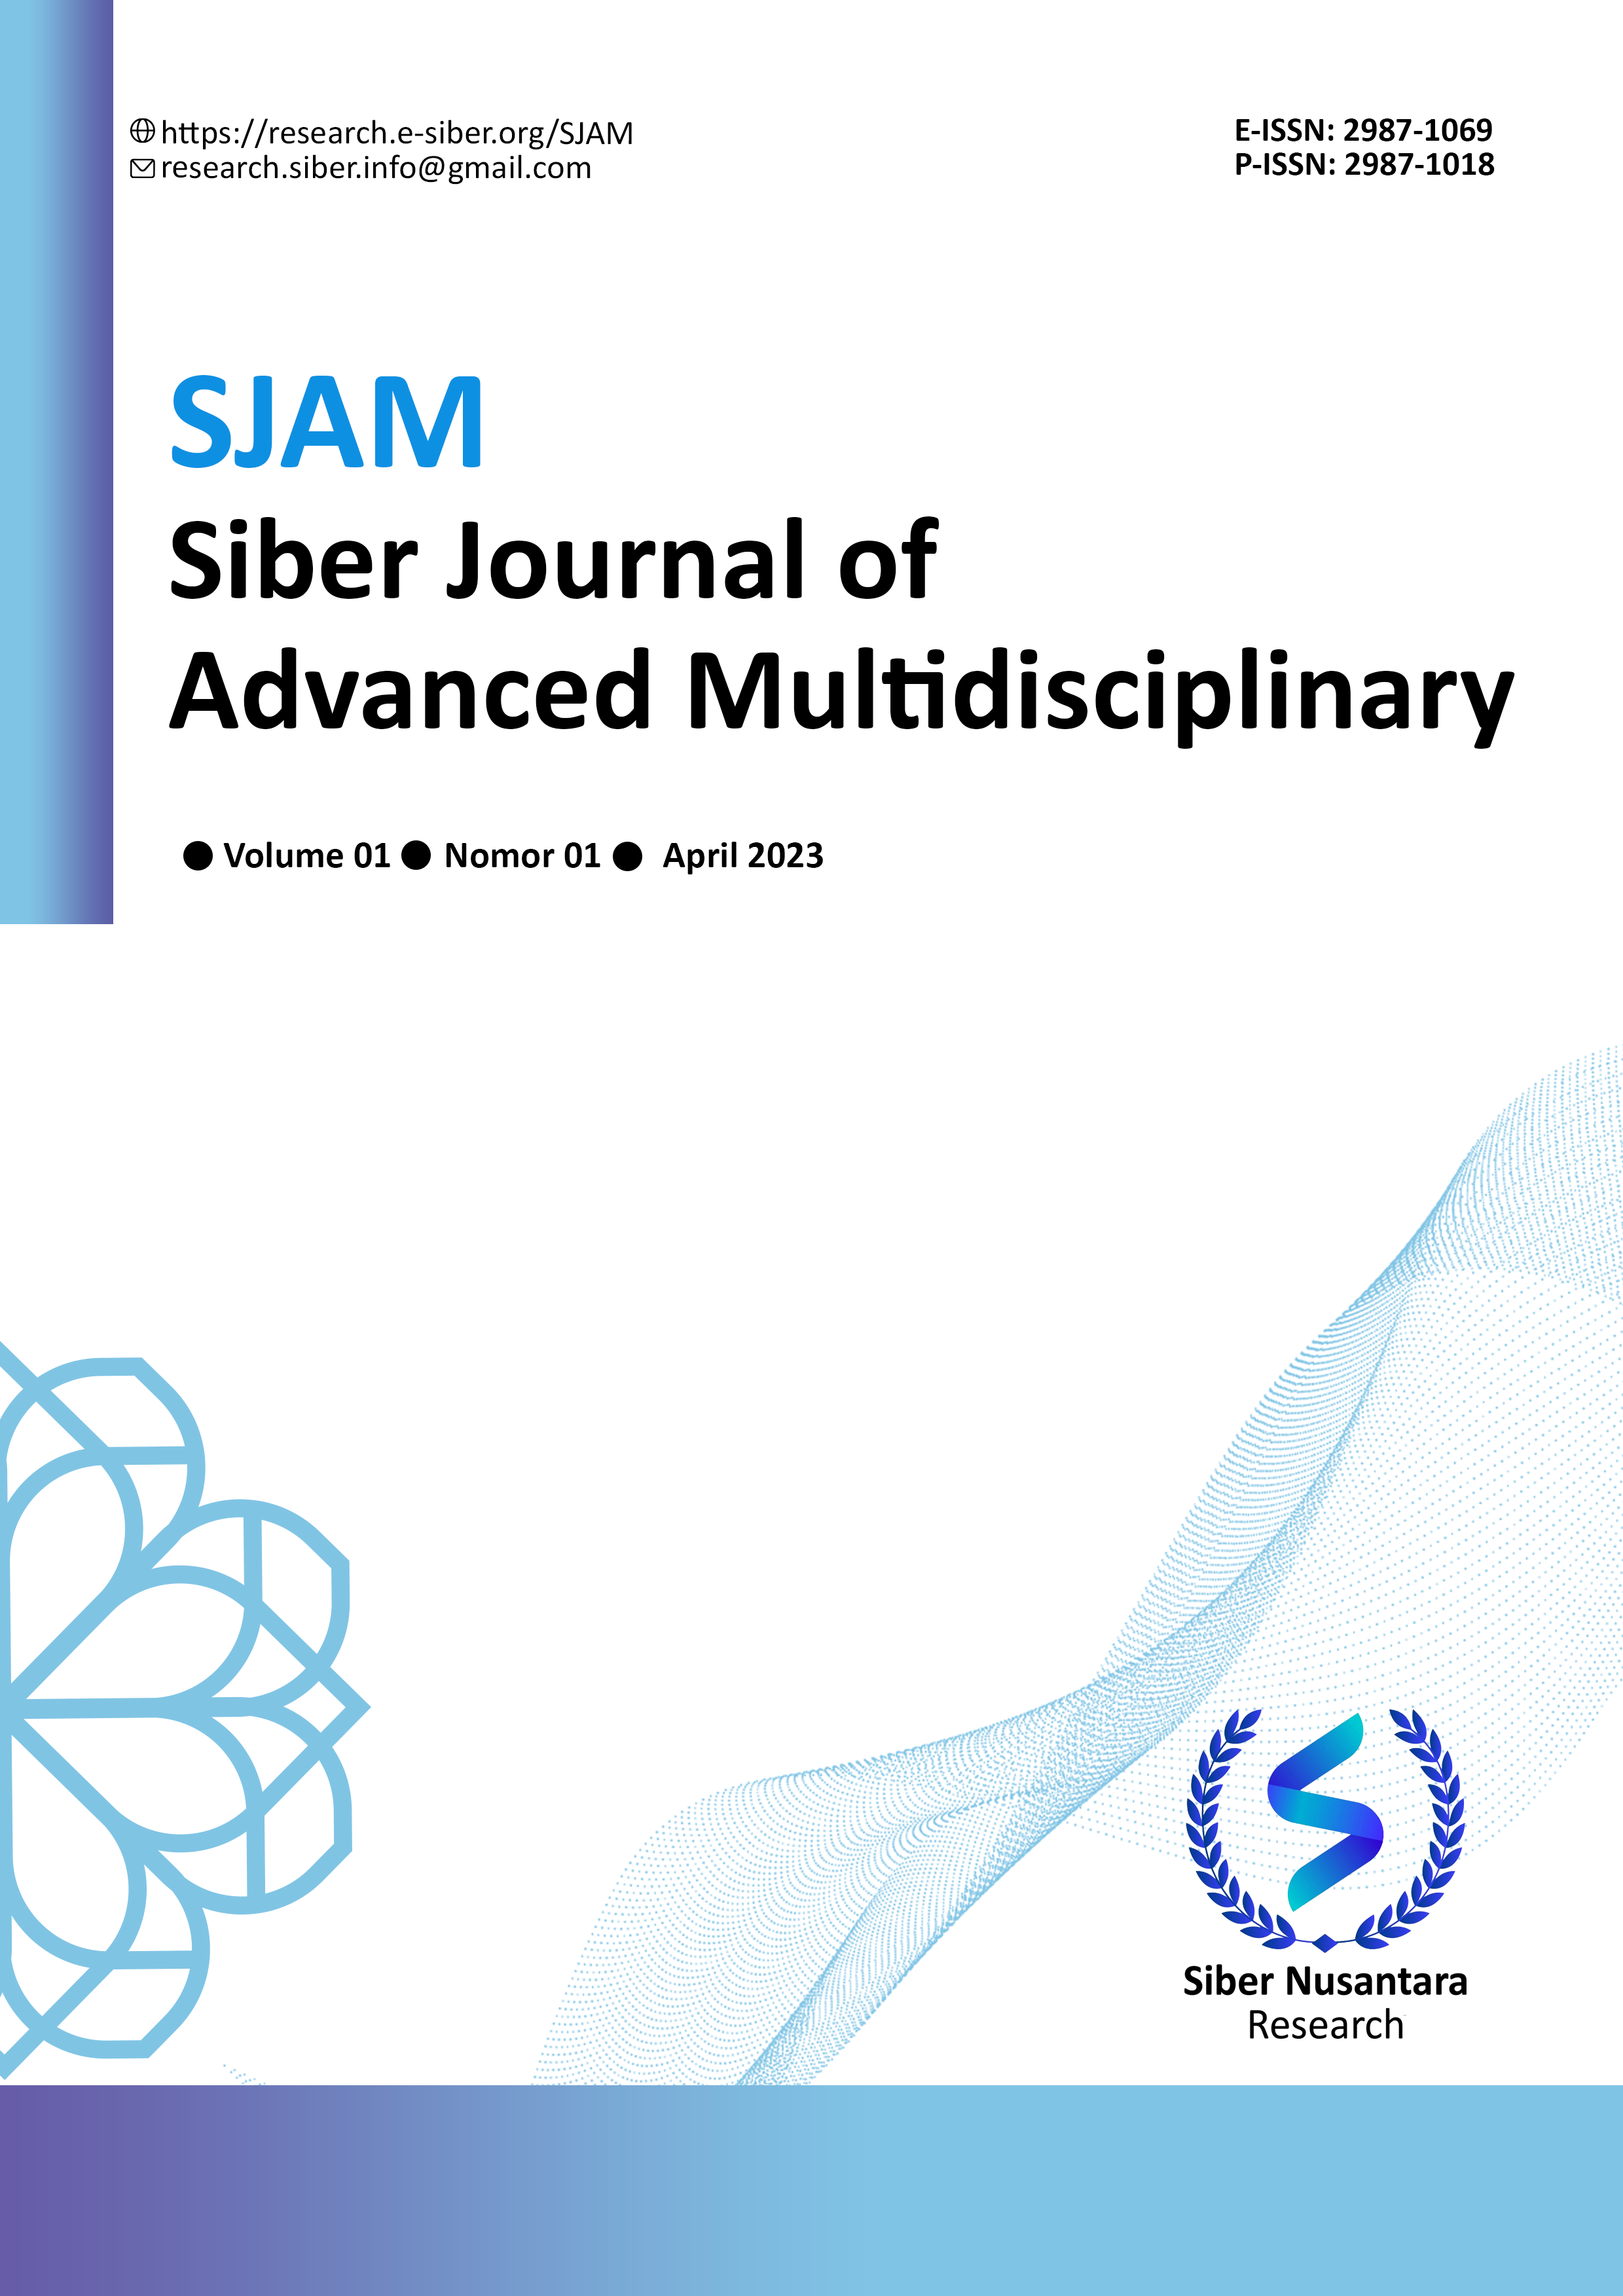 					View Vol. 1 No. 1 (2023): (SJAM) Siber Journal of Advanced Multidisciplinary (April 2023)
				